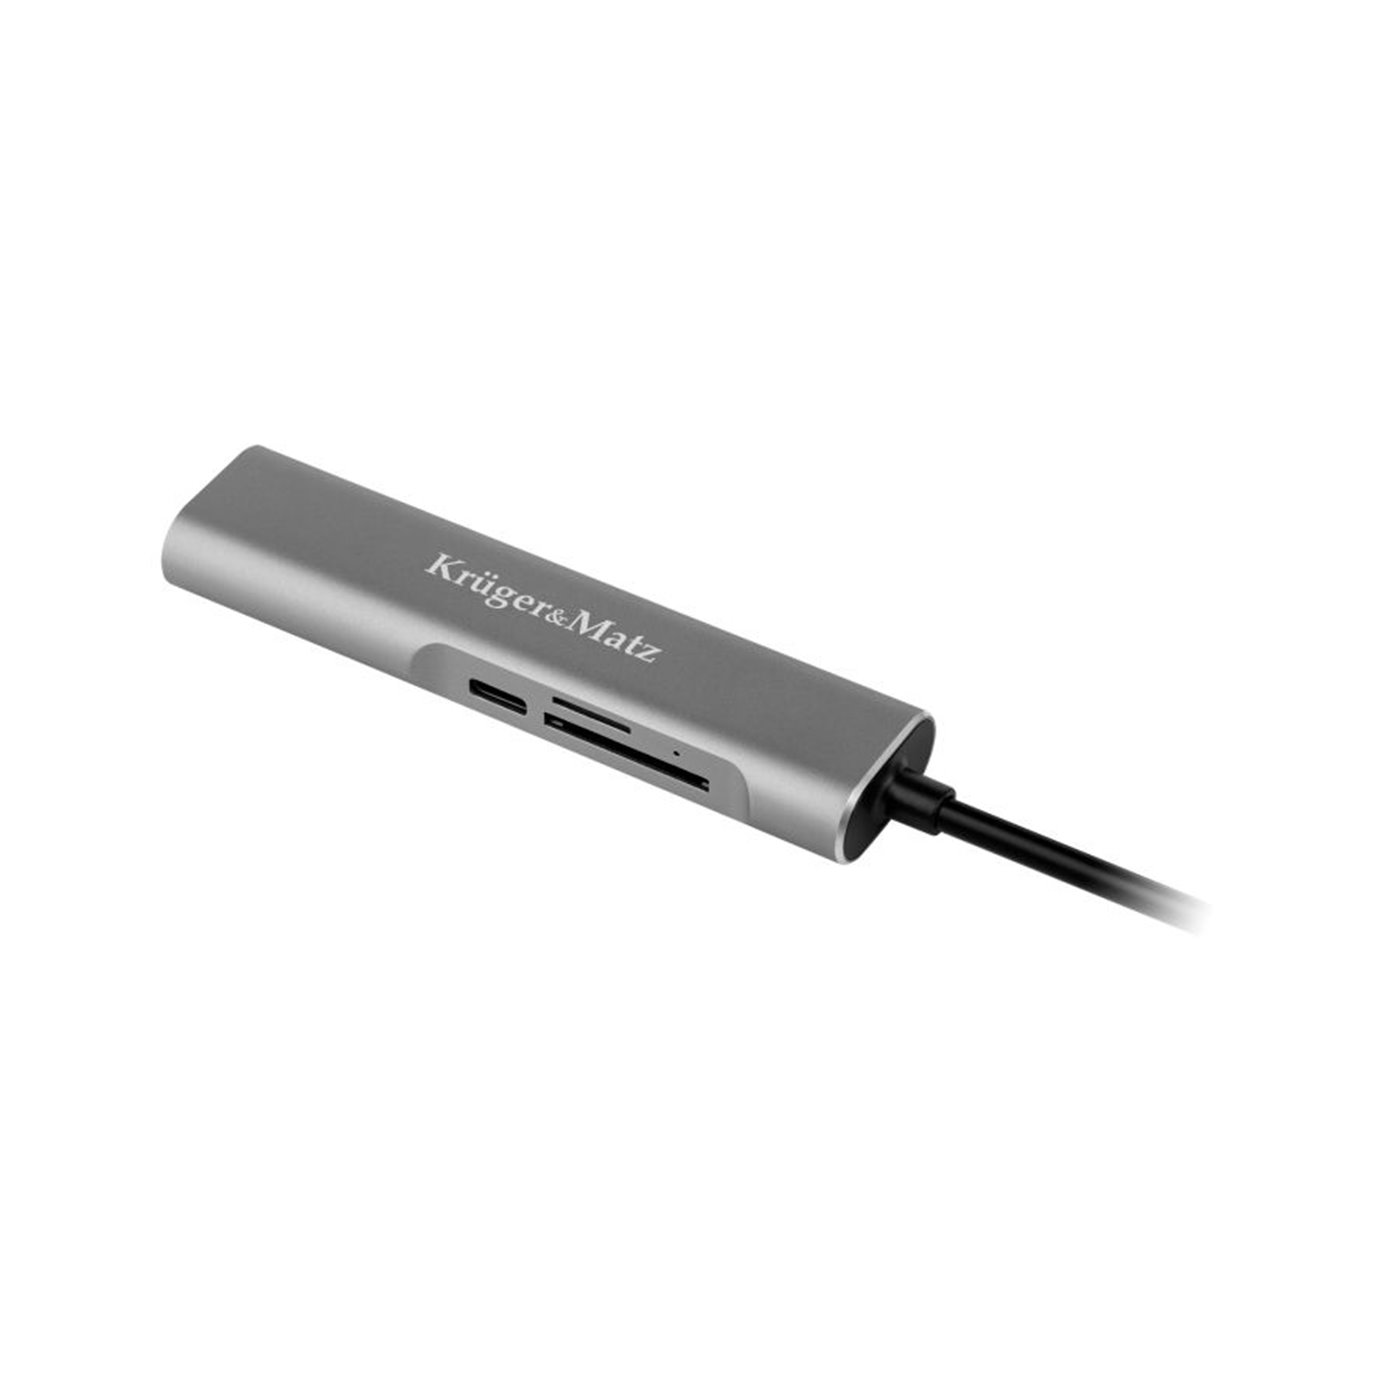 Adaptér (HUB) USB typ C na HDMI/USB3.0/SD/MicroSD/C port